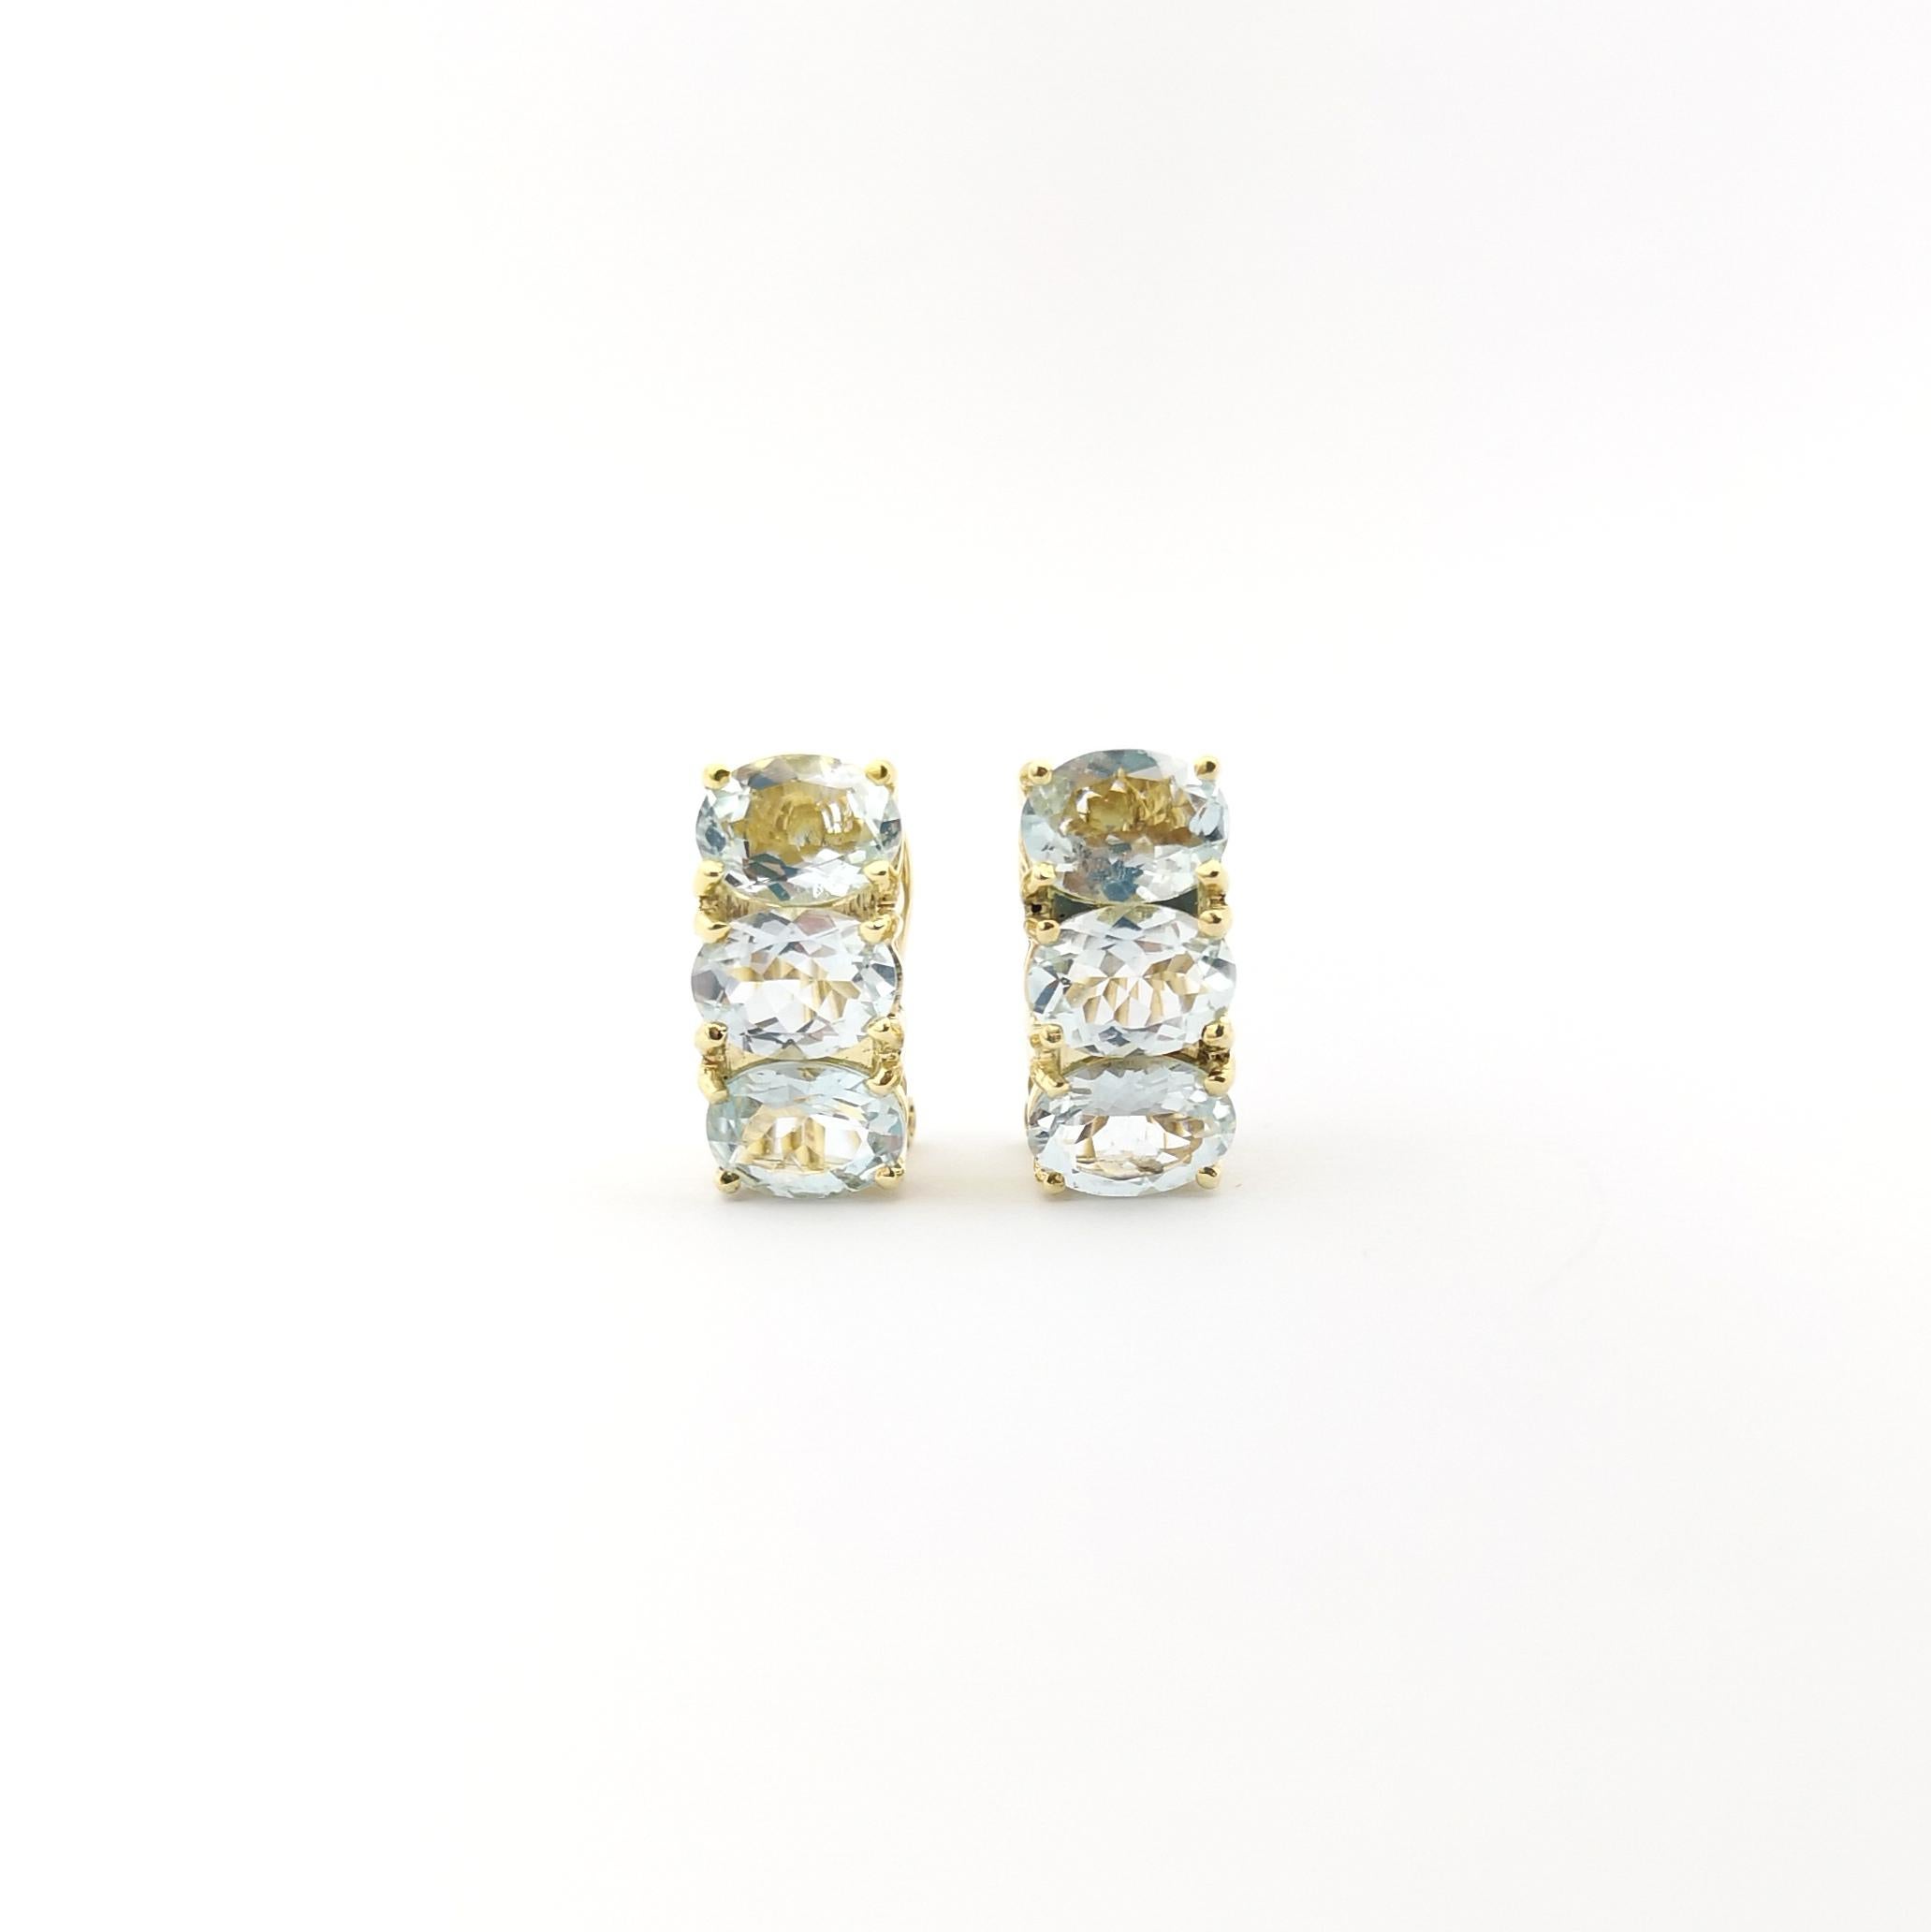 Oval Cut Aquamarine Earrings set in 14K Gold Settings For Sale